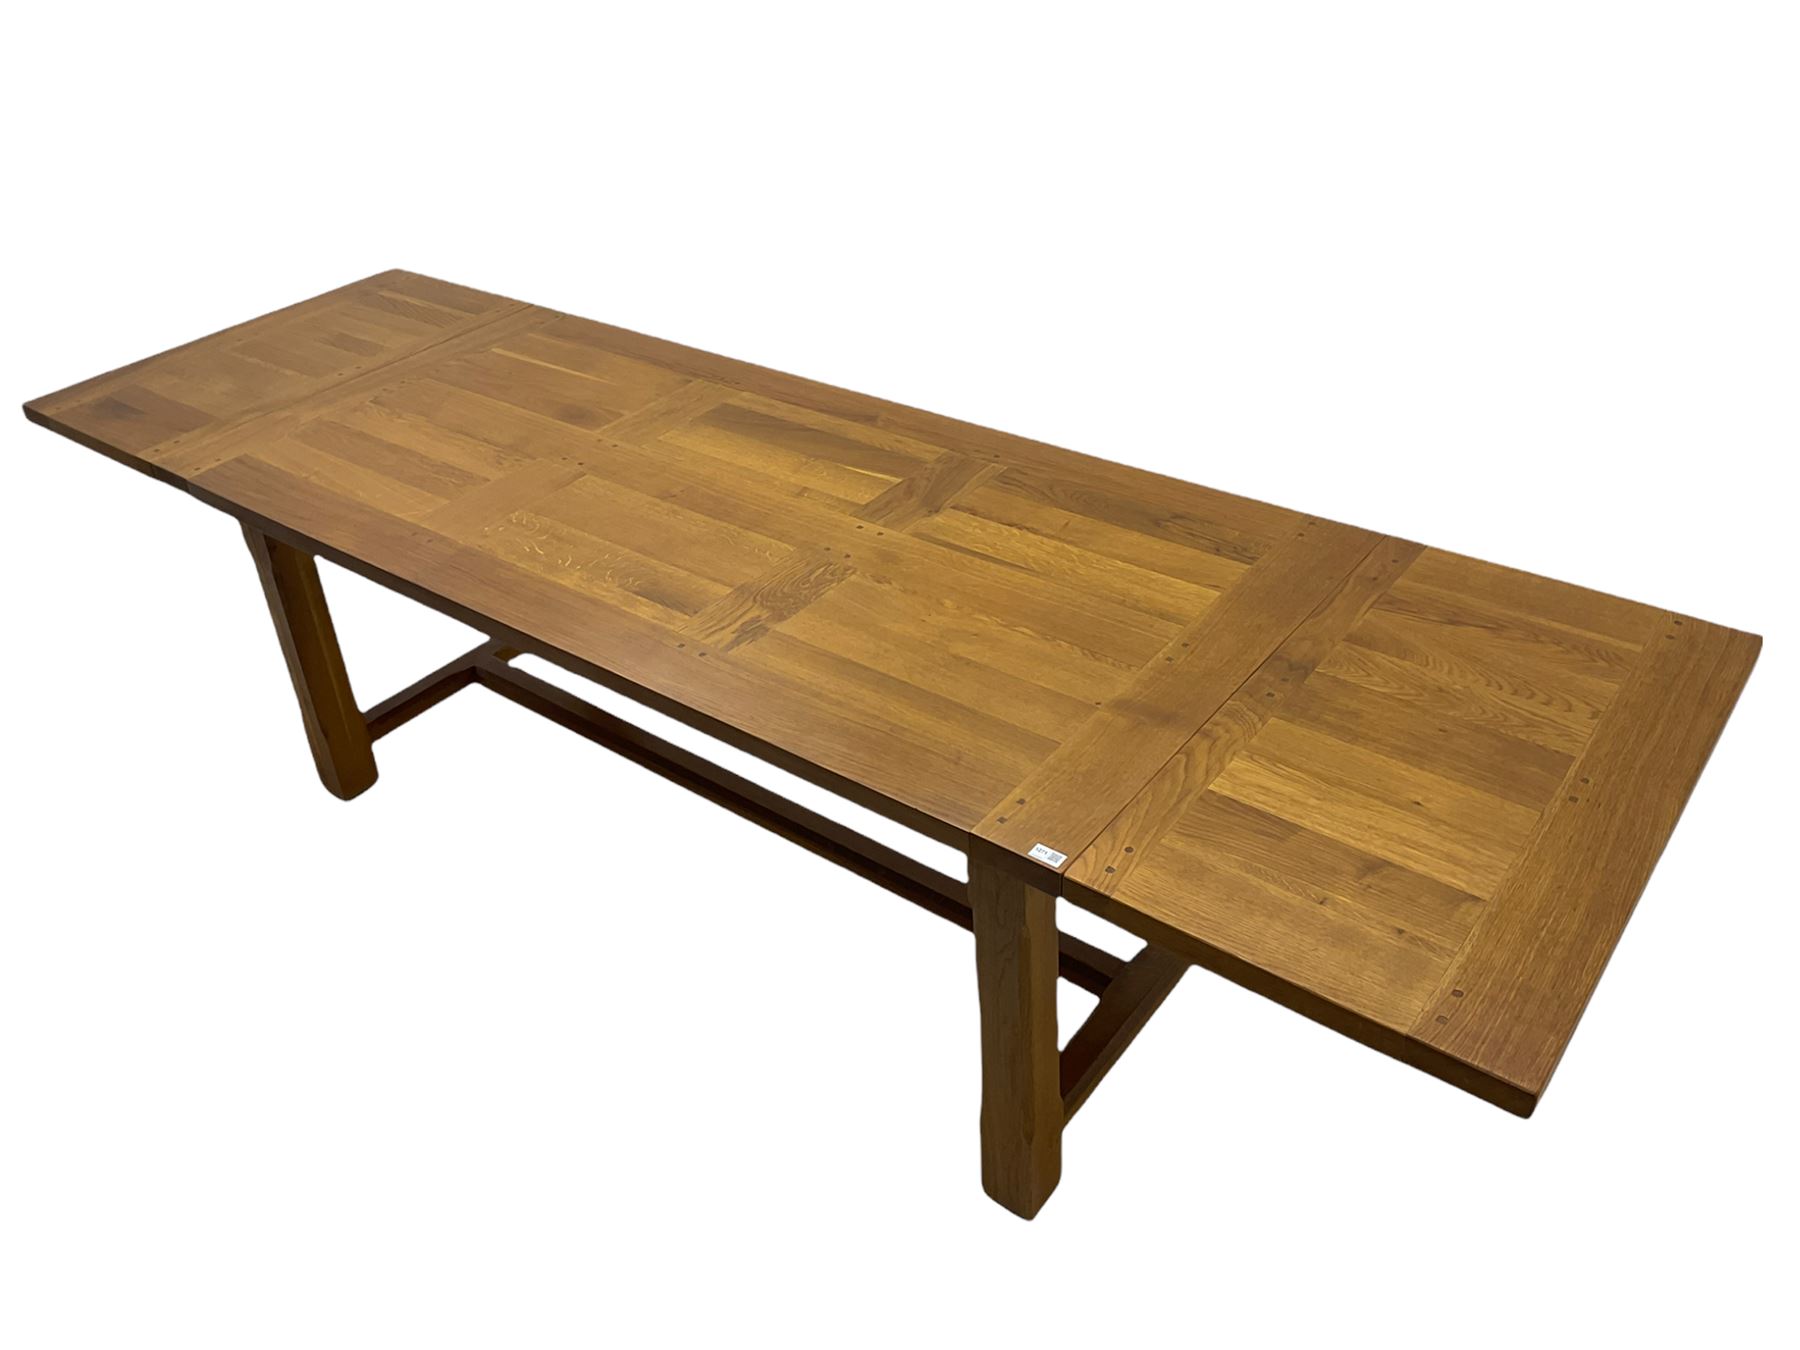 Manor Oak - light oak rectangular dining table - Image 9 of 11